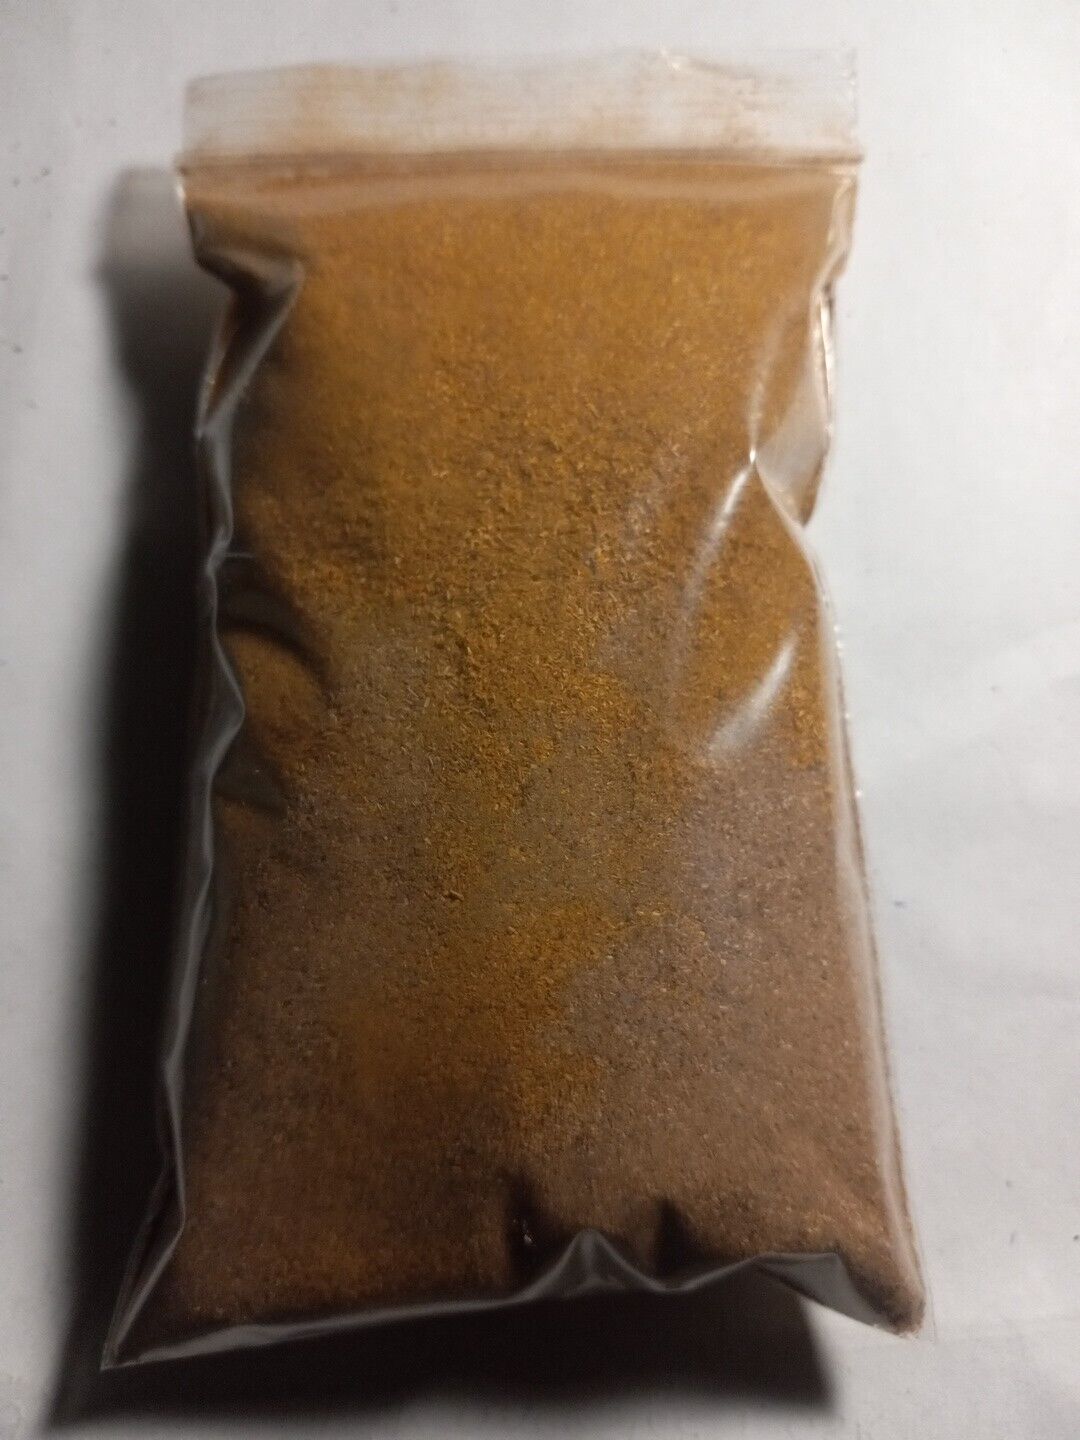 Patchouli Incense Powder